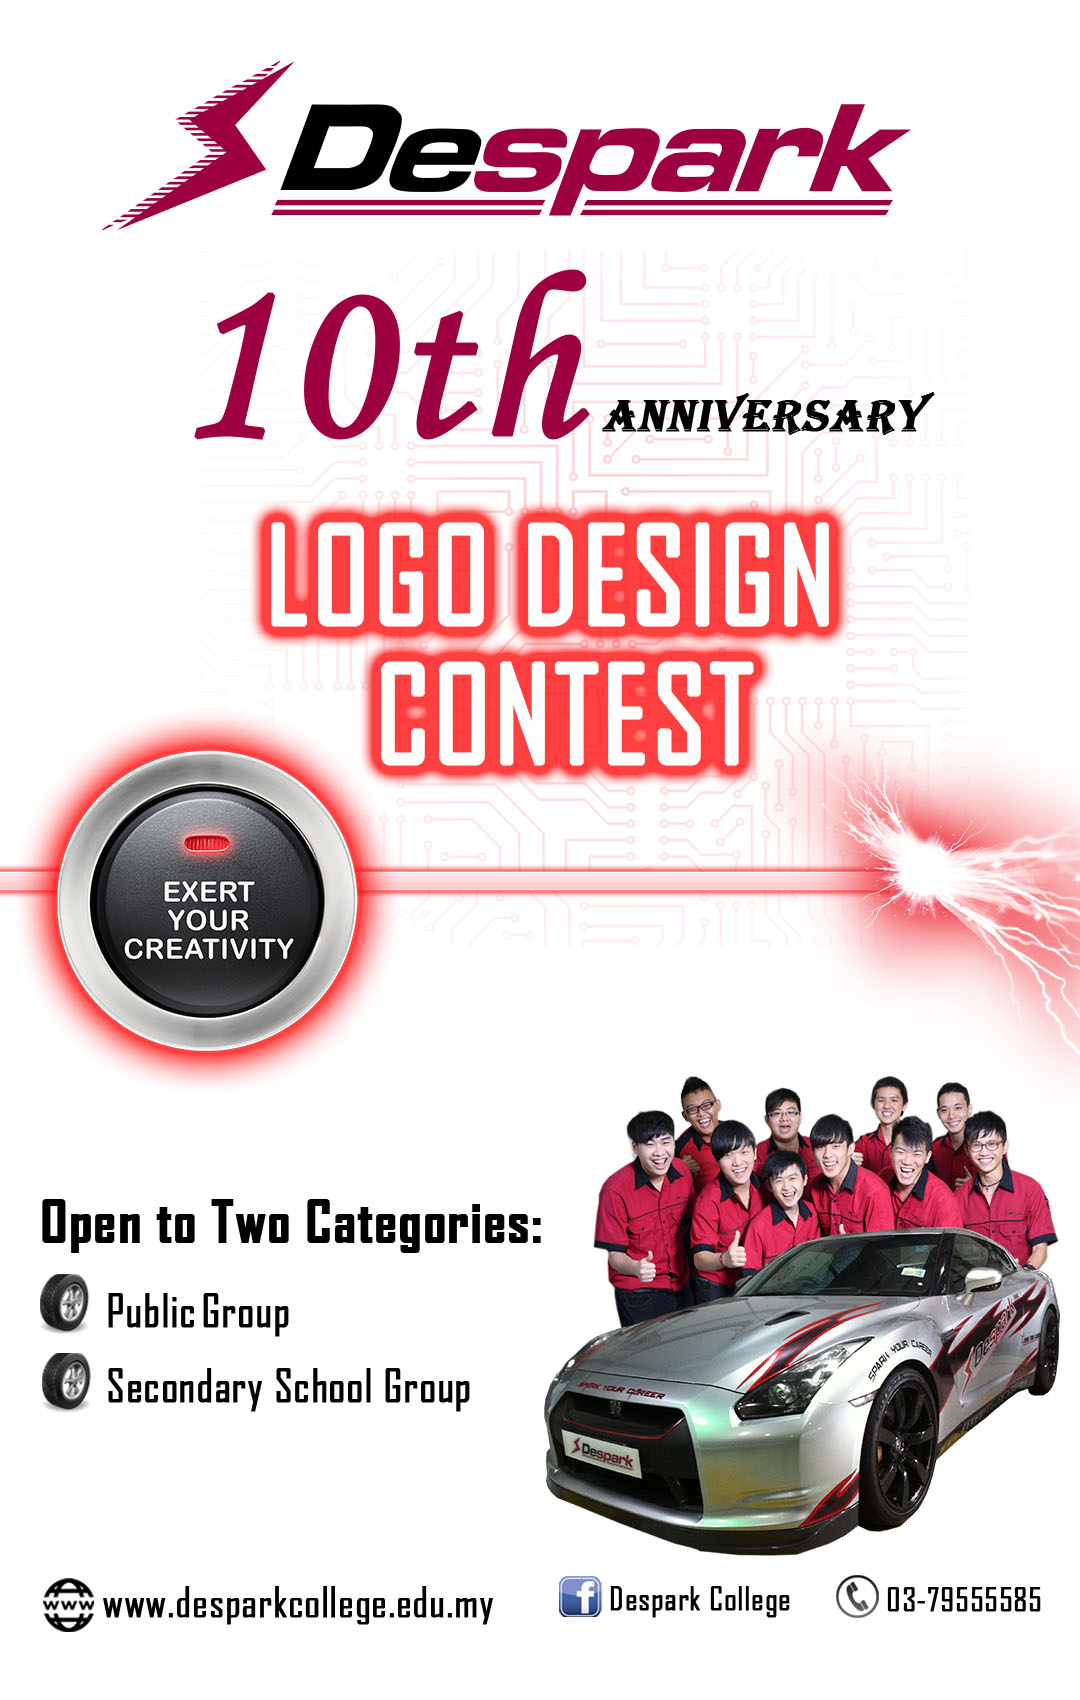 Logo Design Contest1